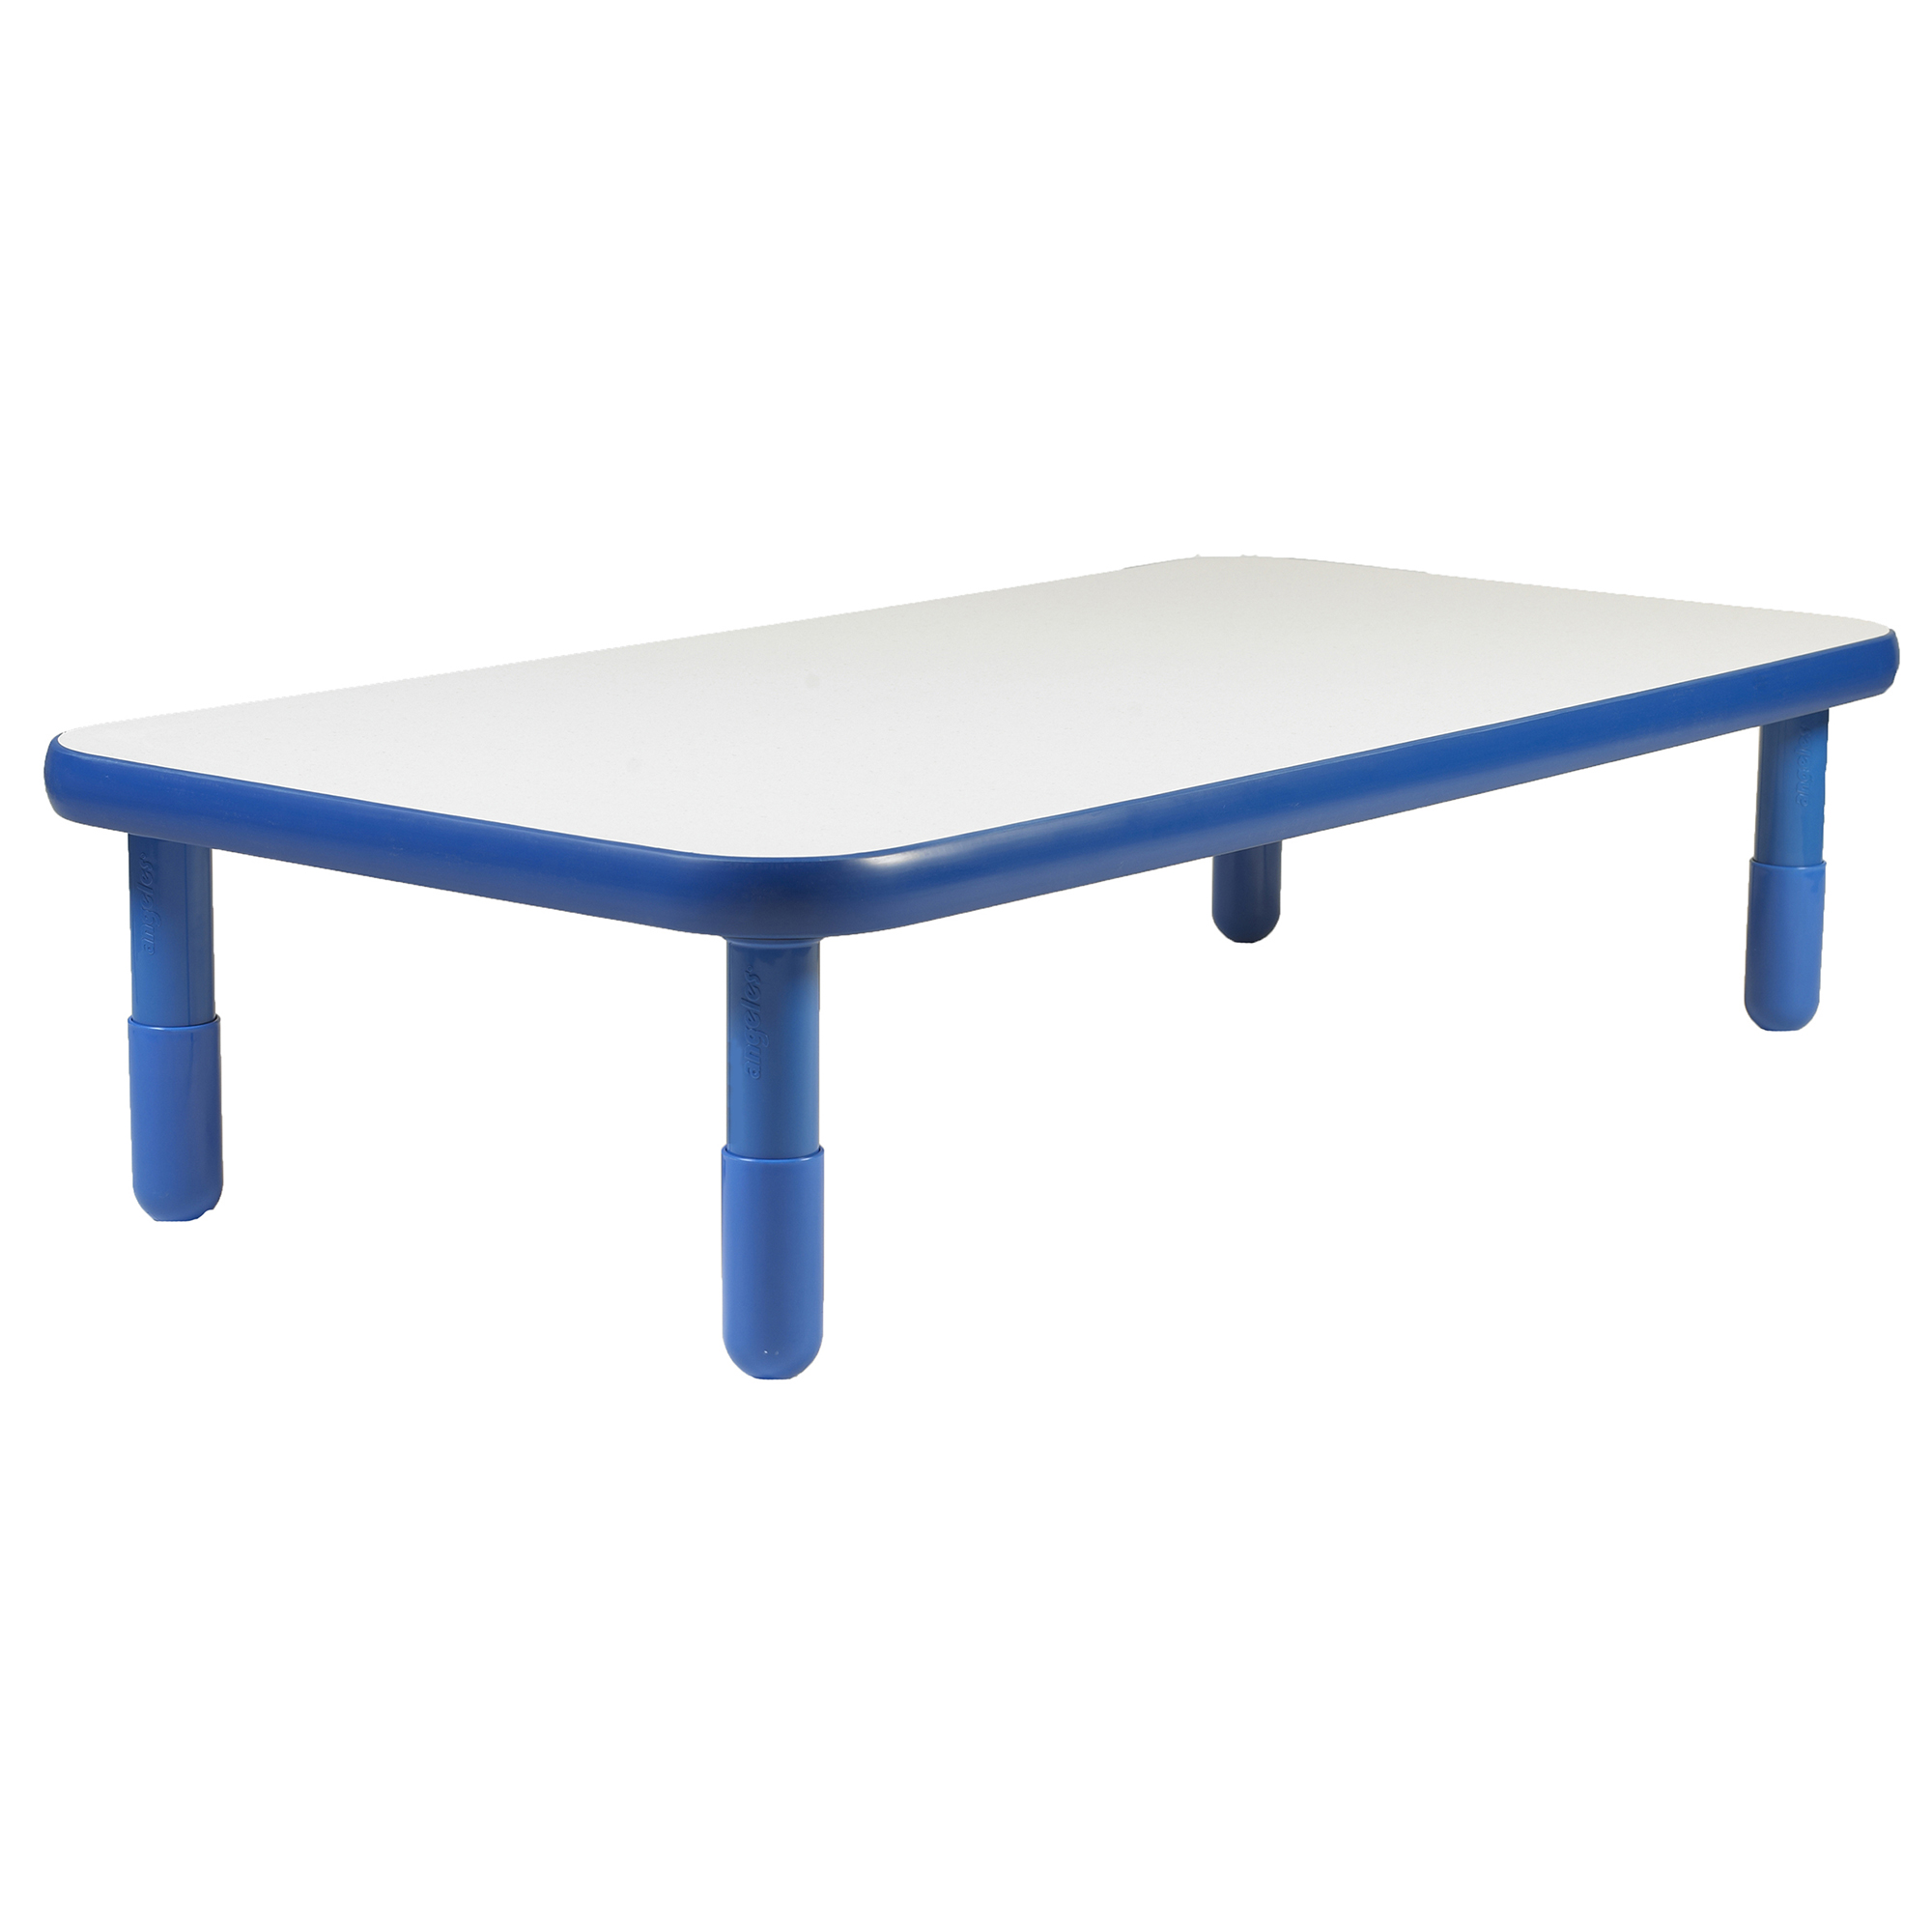 BaseLine® 152,5 cm  x 76 cm  Rectangular Table - Royal Blue with 35,5 cm  Legs